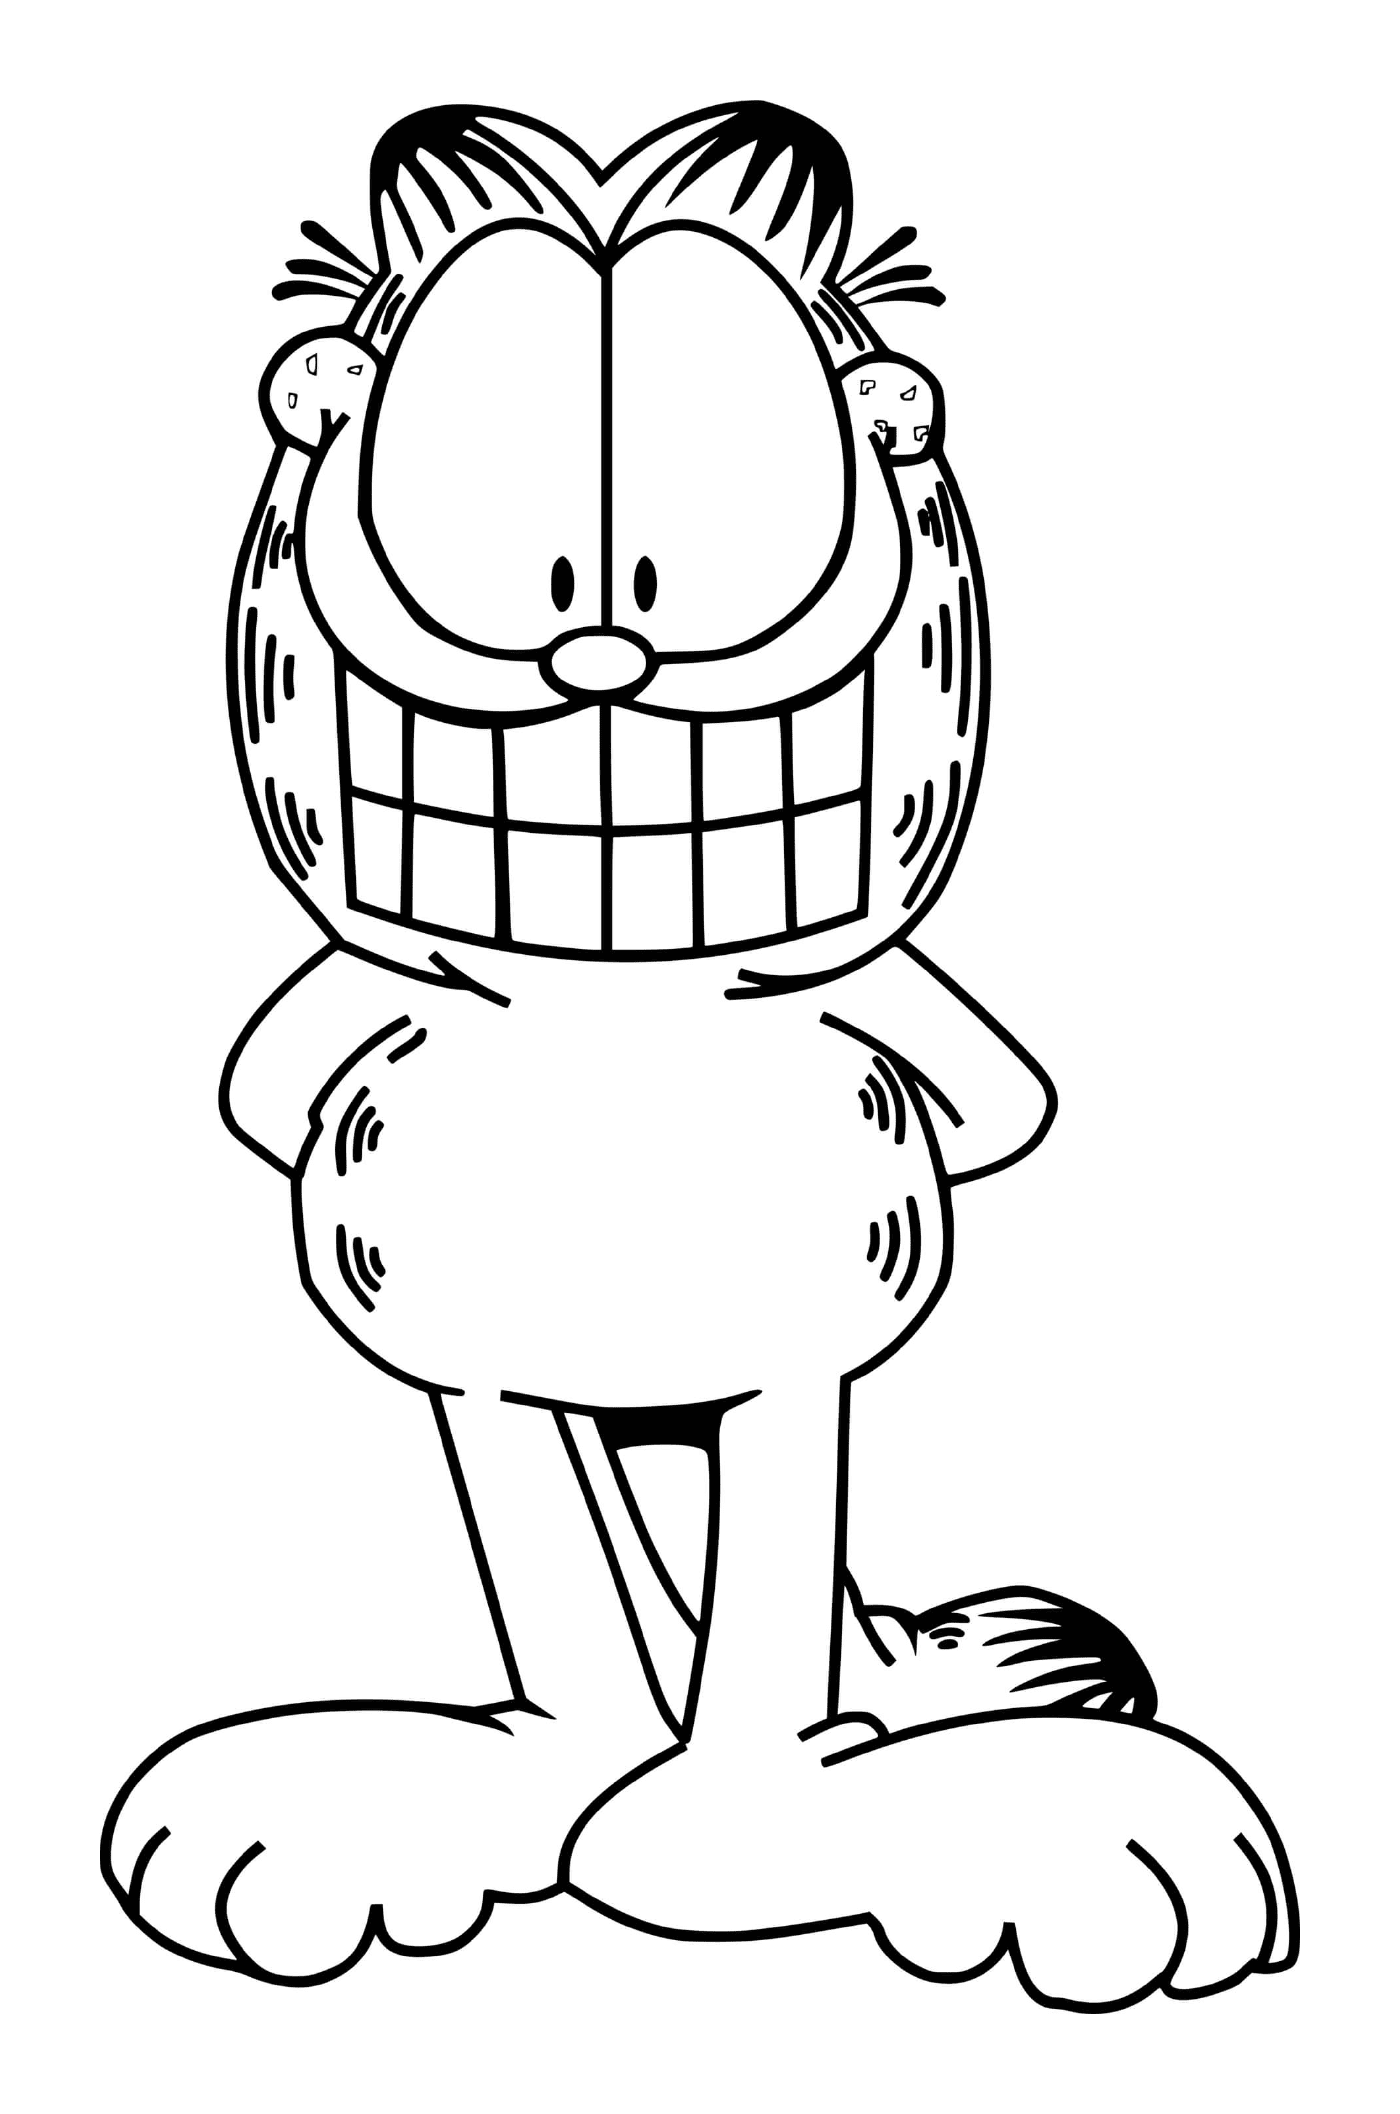   Garfield affiche un grand sourire 